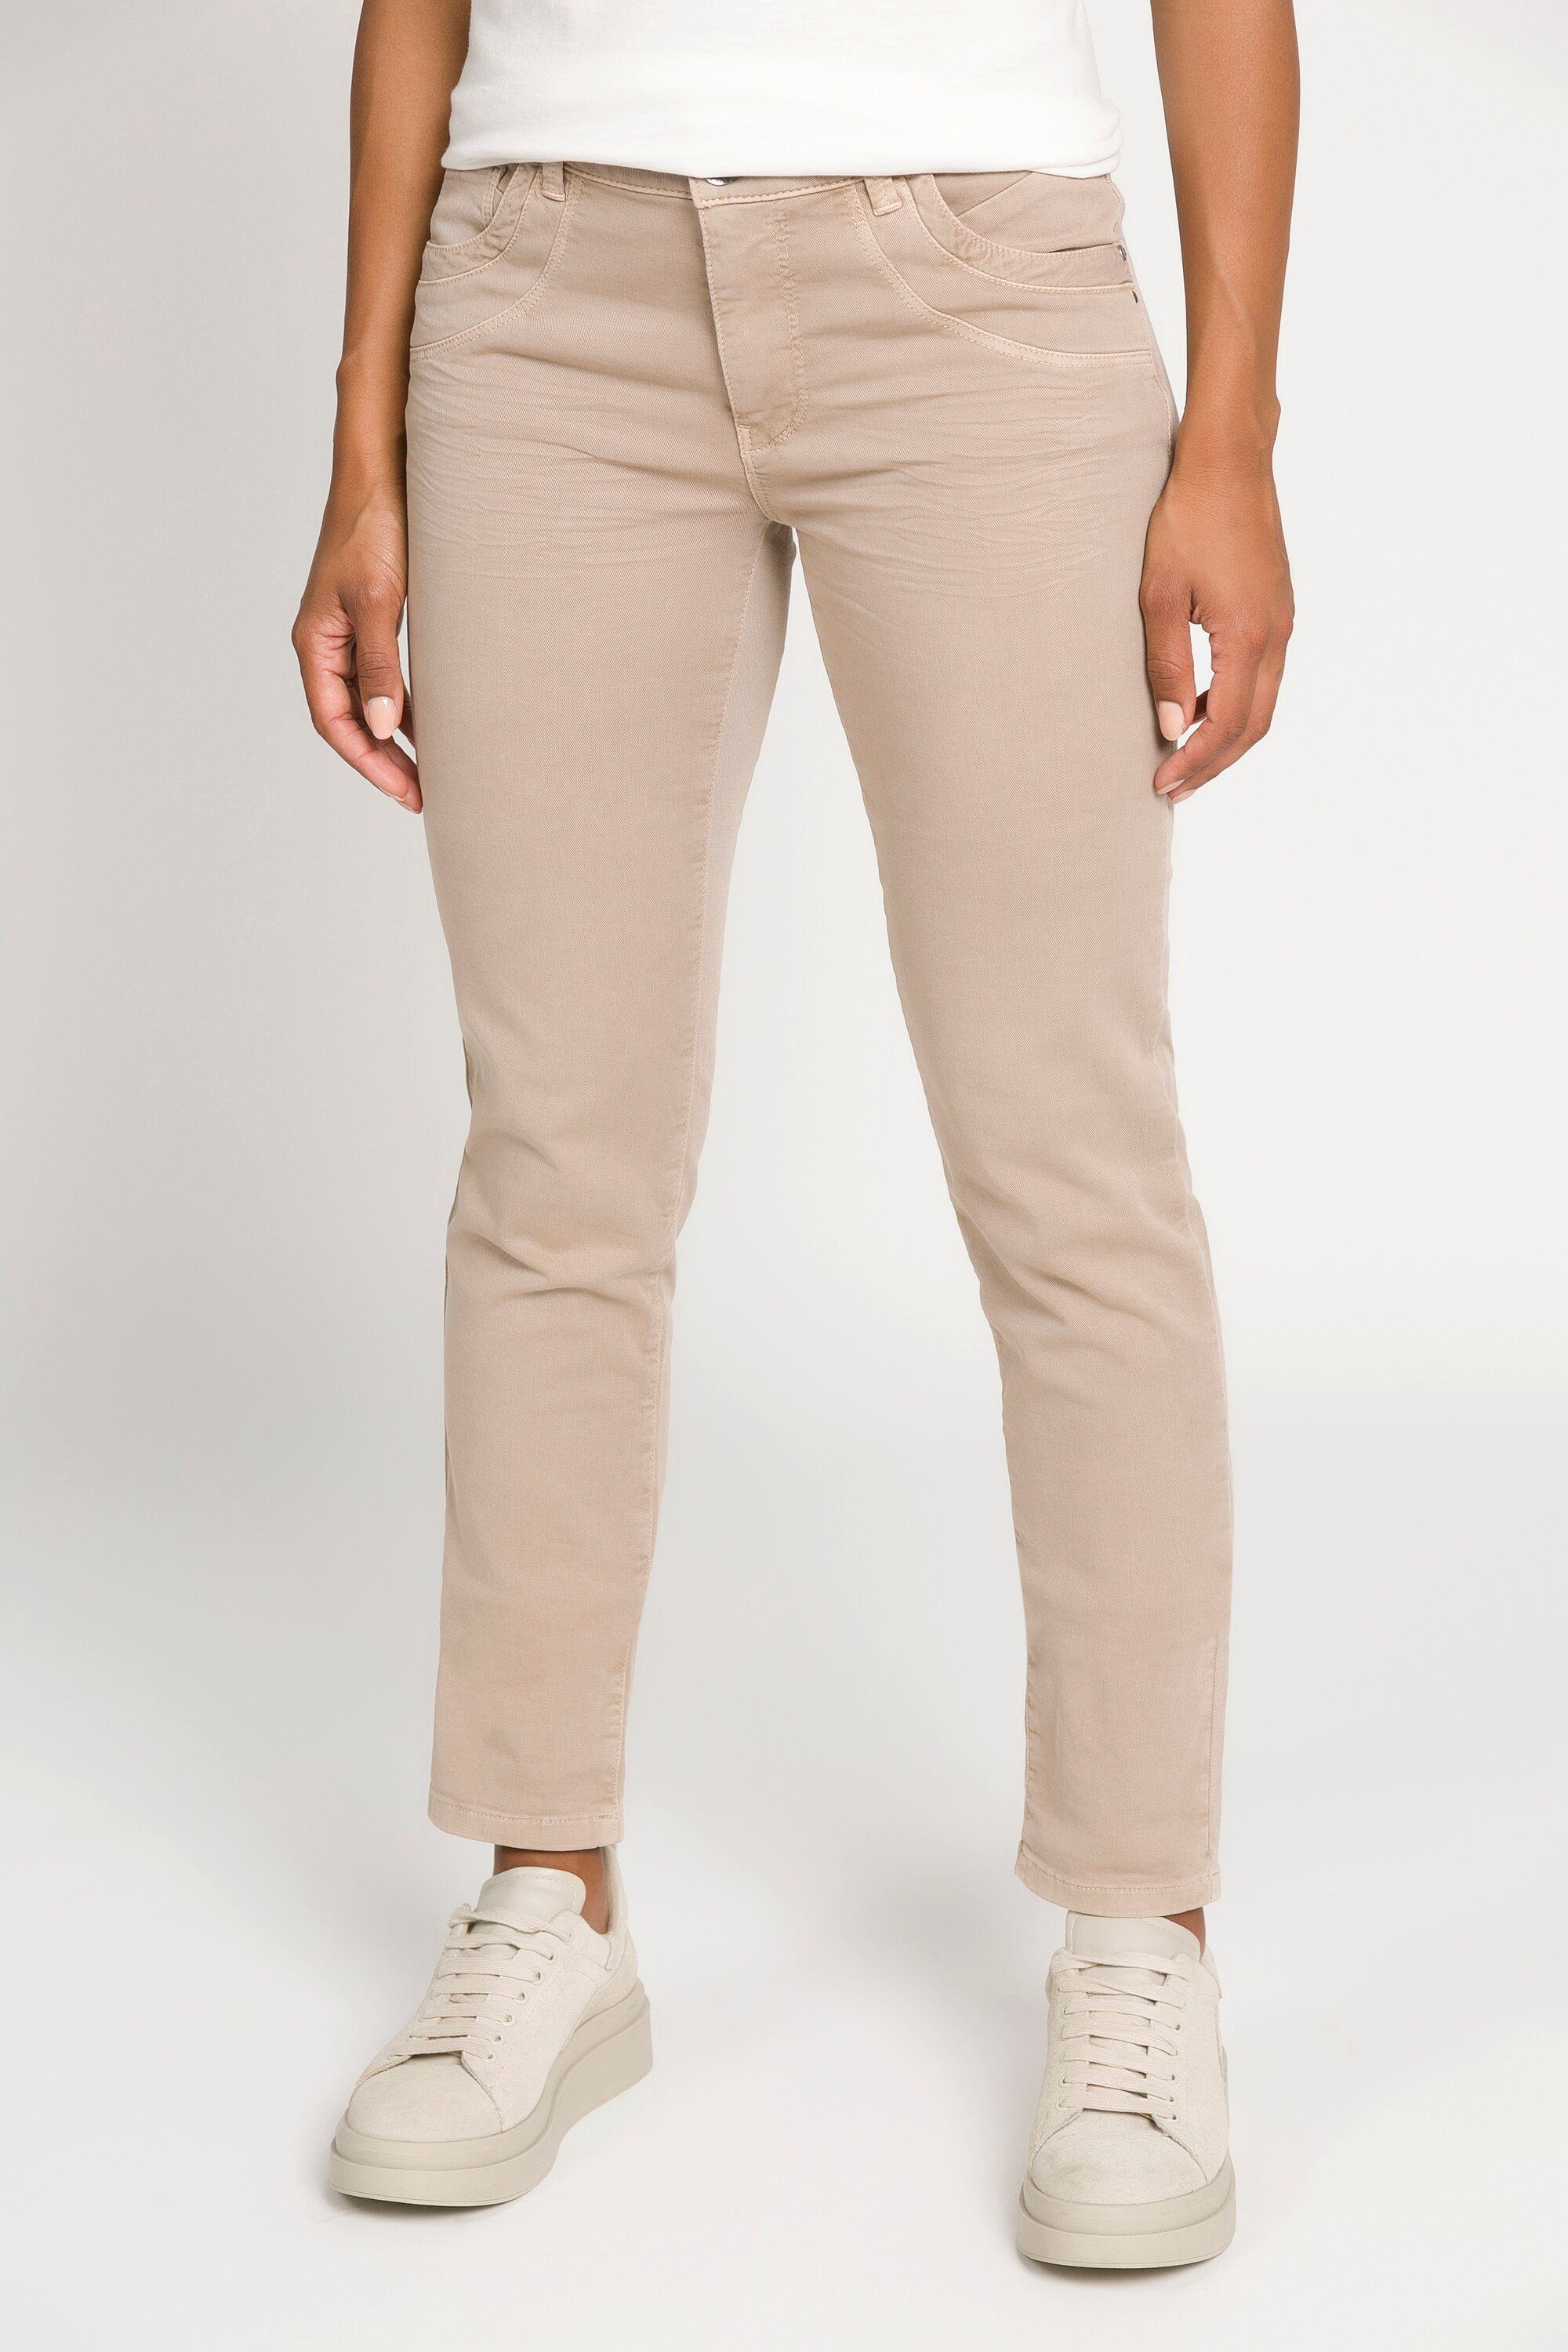 Laura 5-Pocket-Jeans schmales Bein Julia Gina 5-Pocket Colorjeans